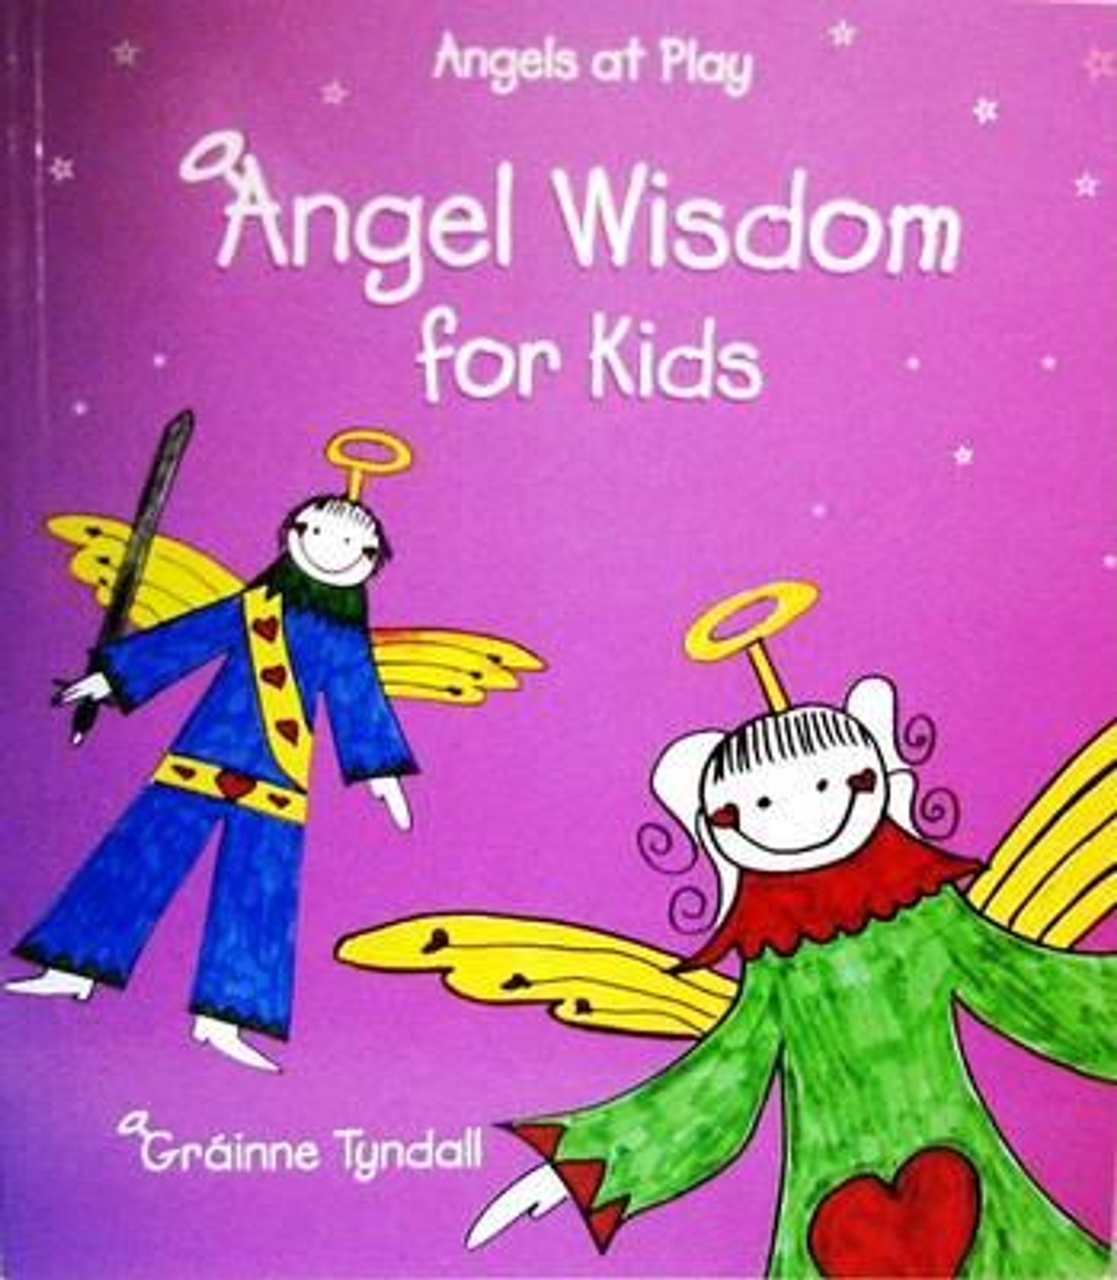 Grainne Tyndall / Angel Wisdom for Kids